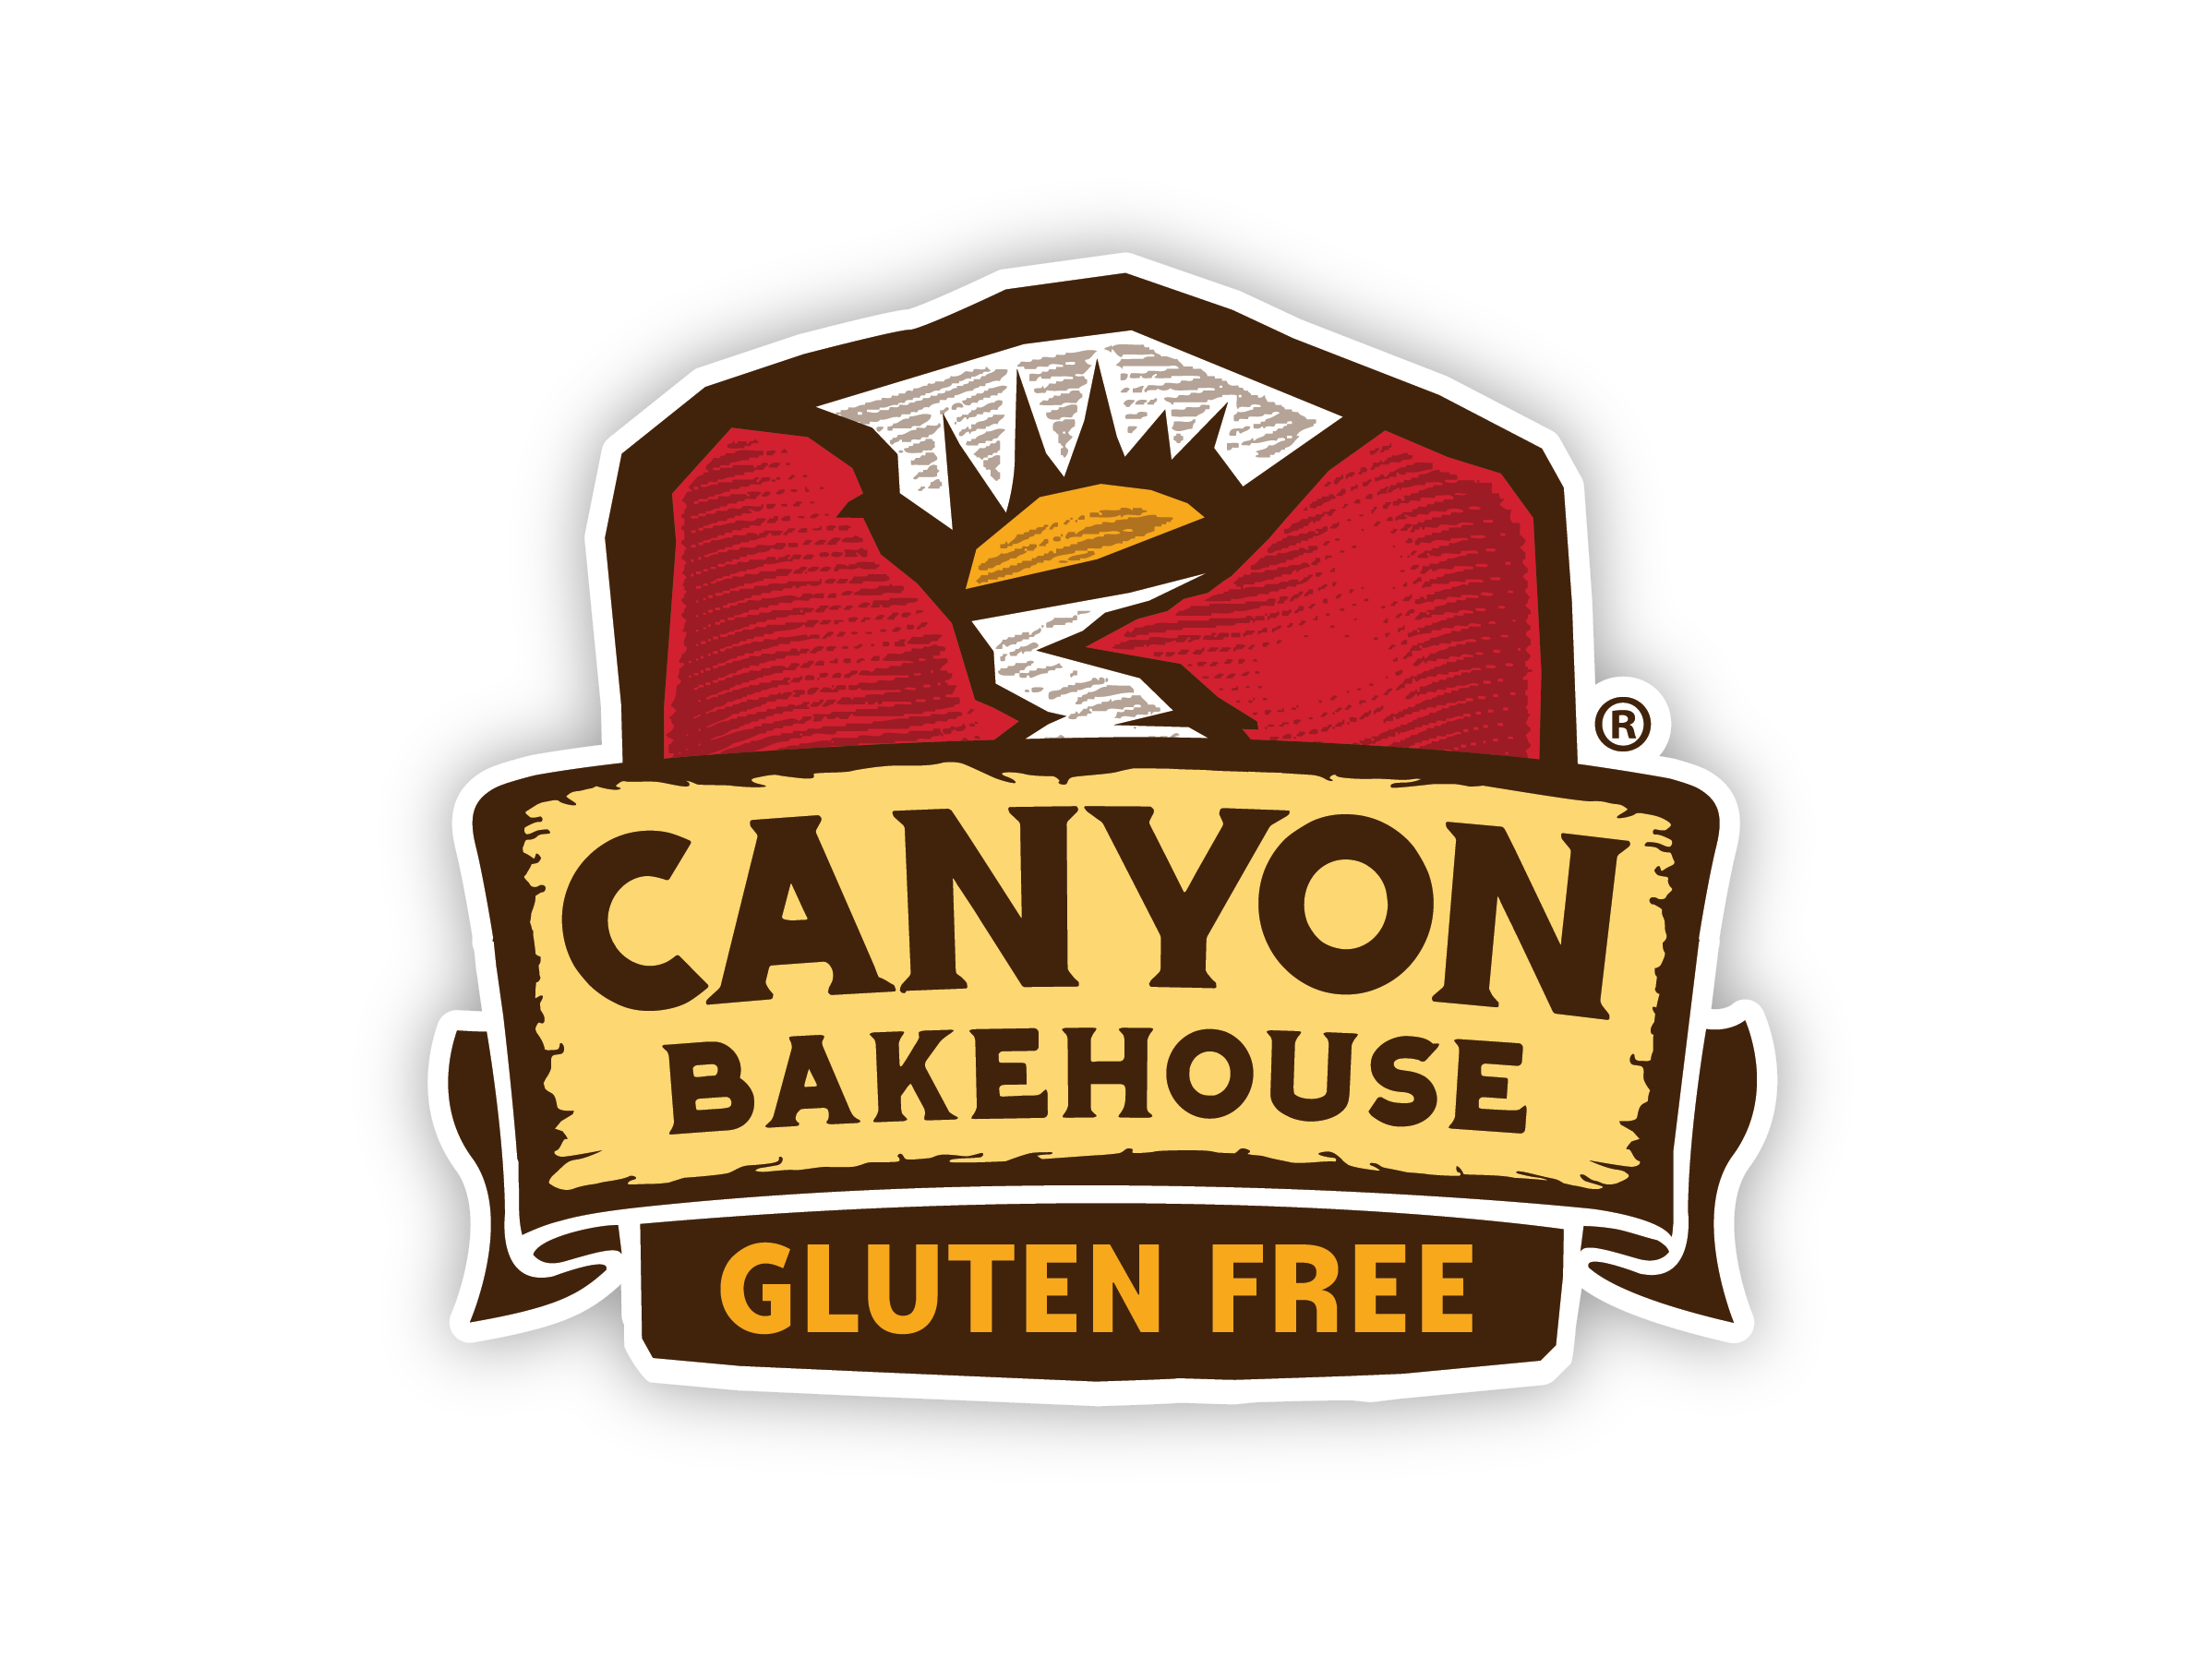 Canyon Bakehouse